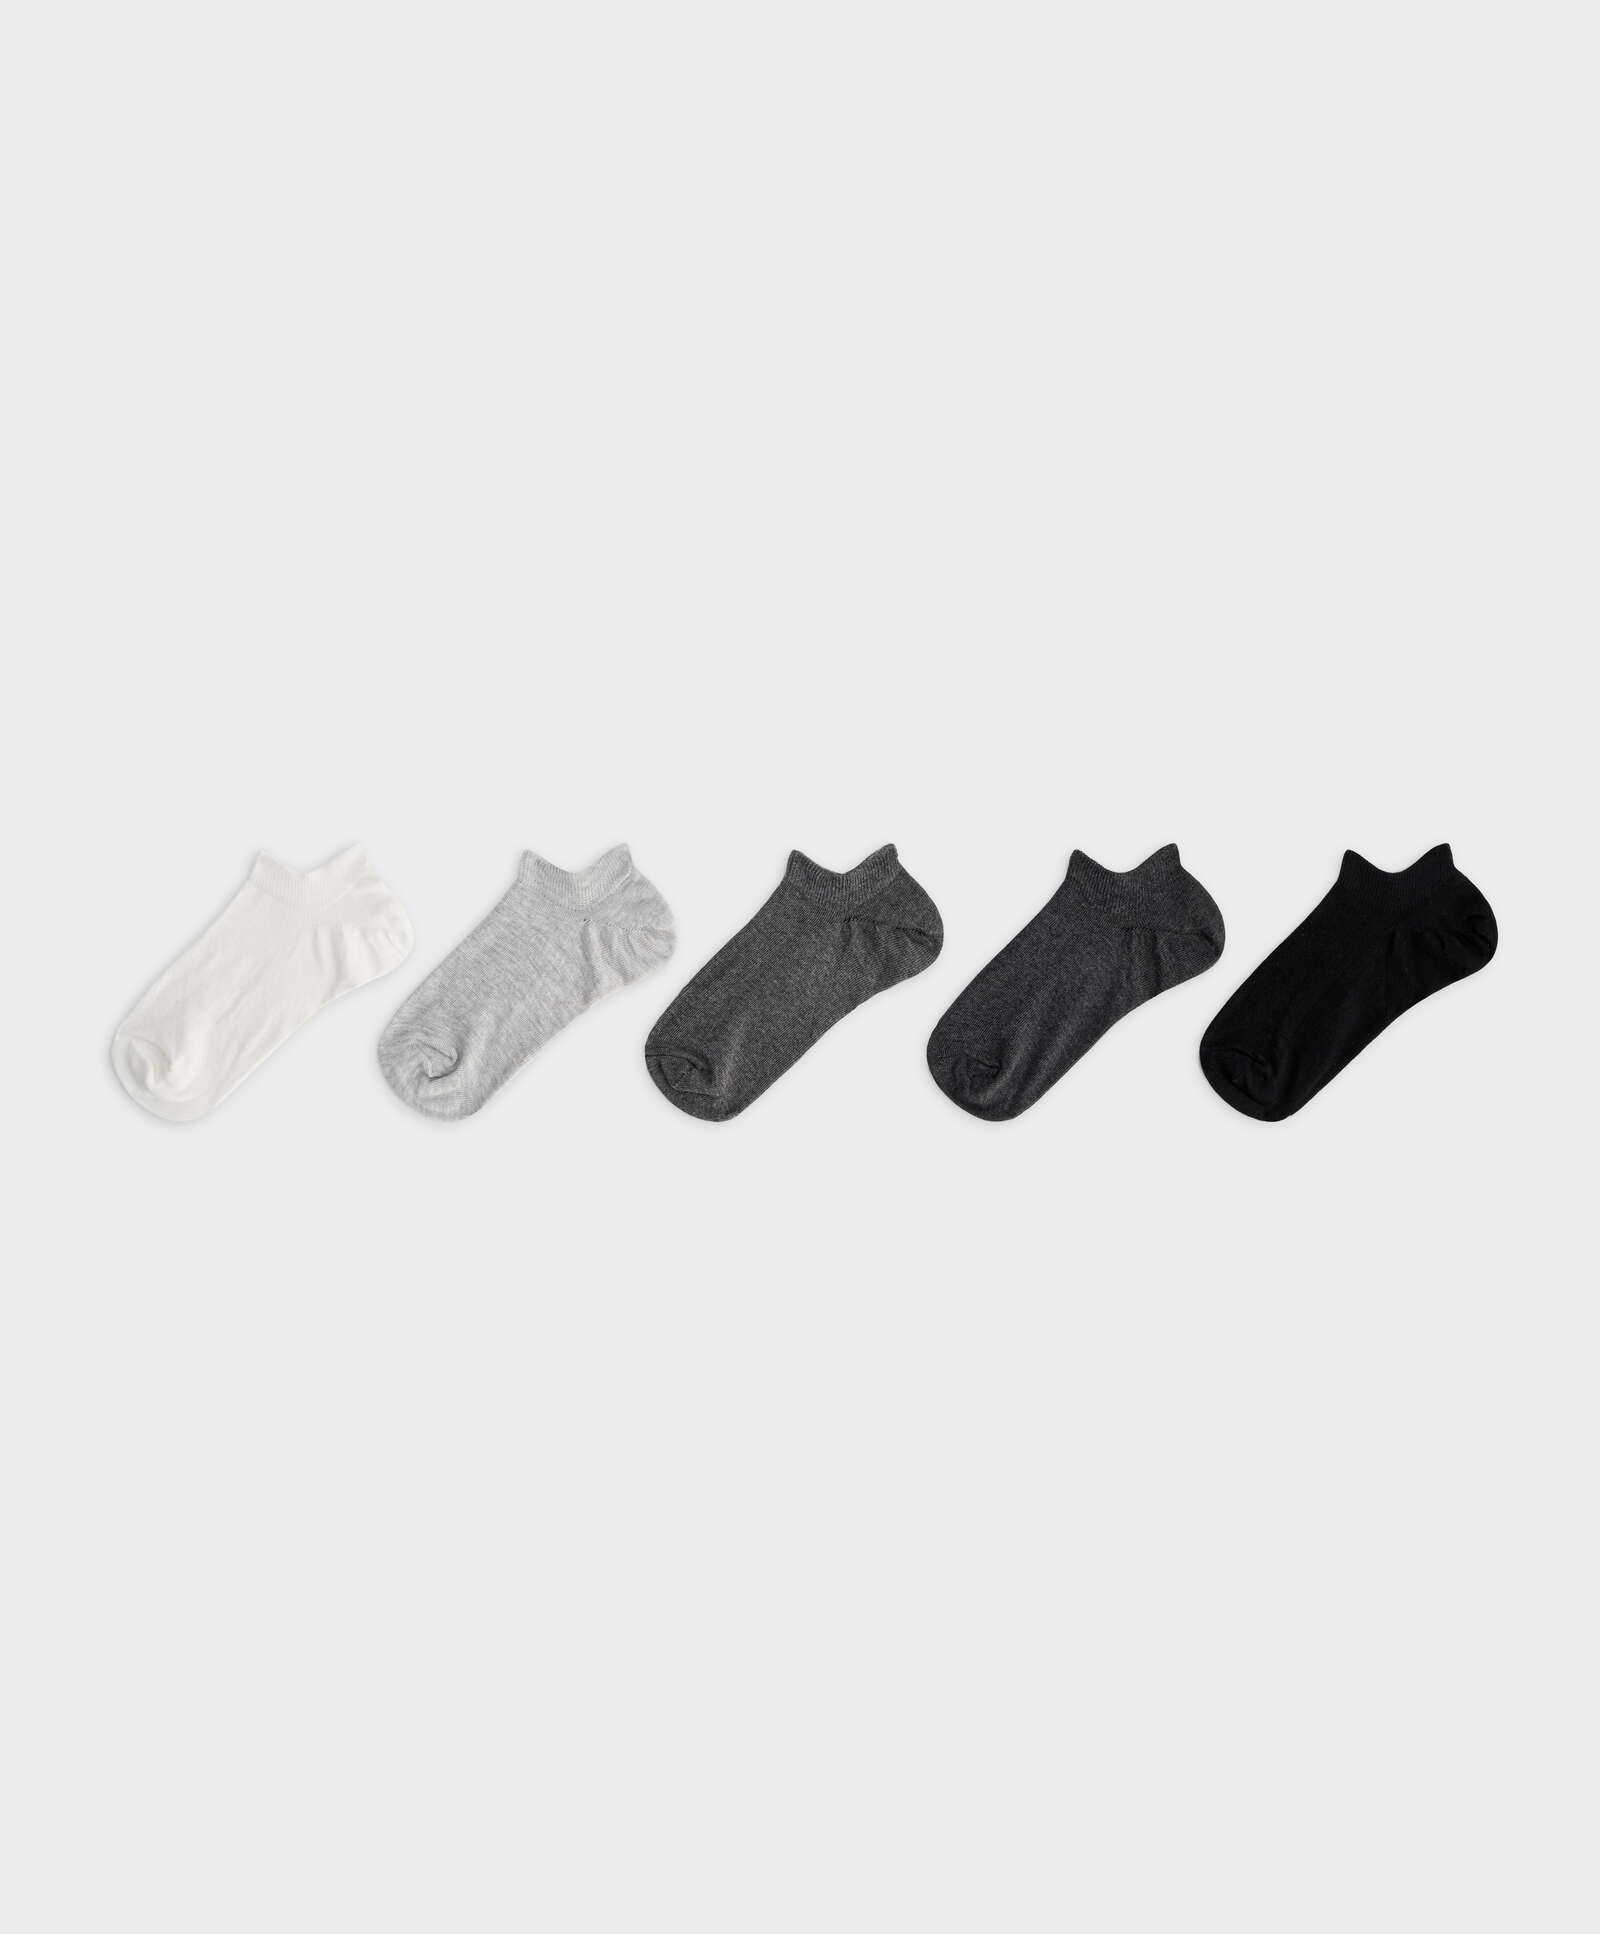 5 pairs of cotton trainer socks